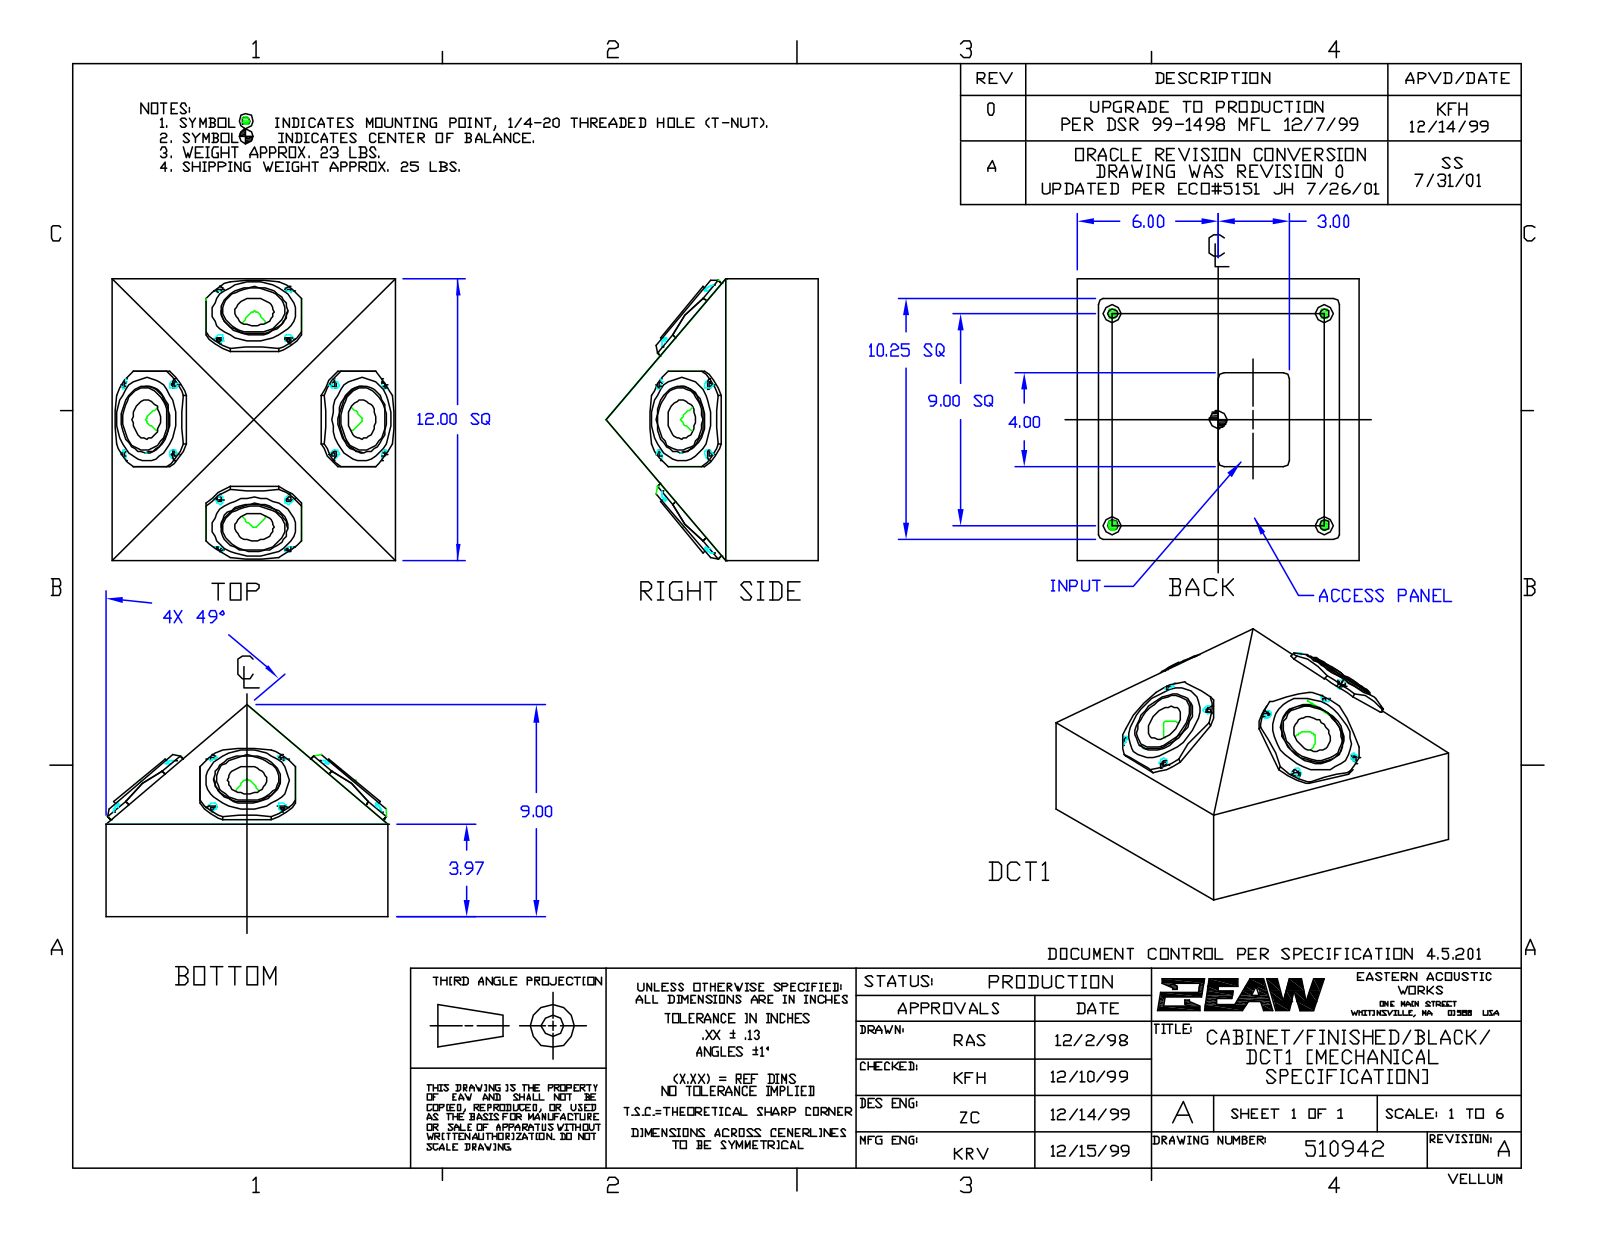 Panasonic DCT1 DRW2D Service Manual